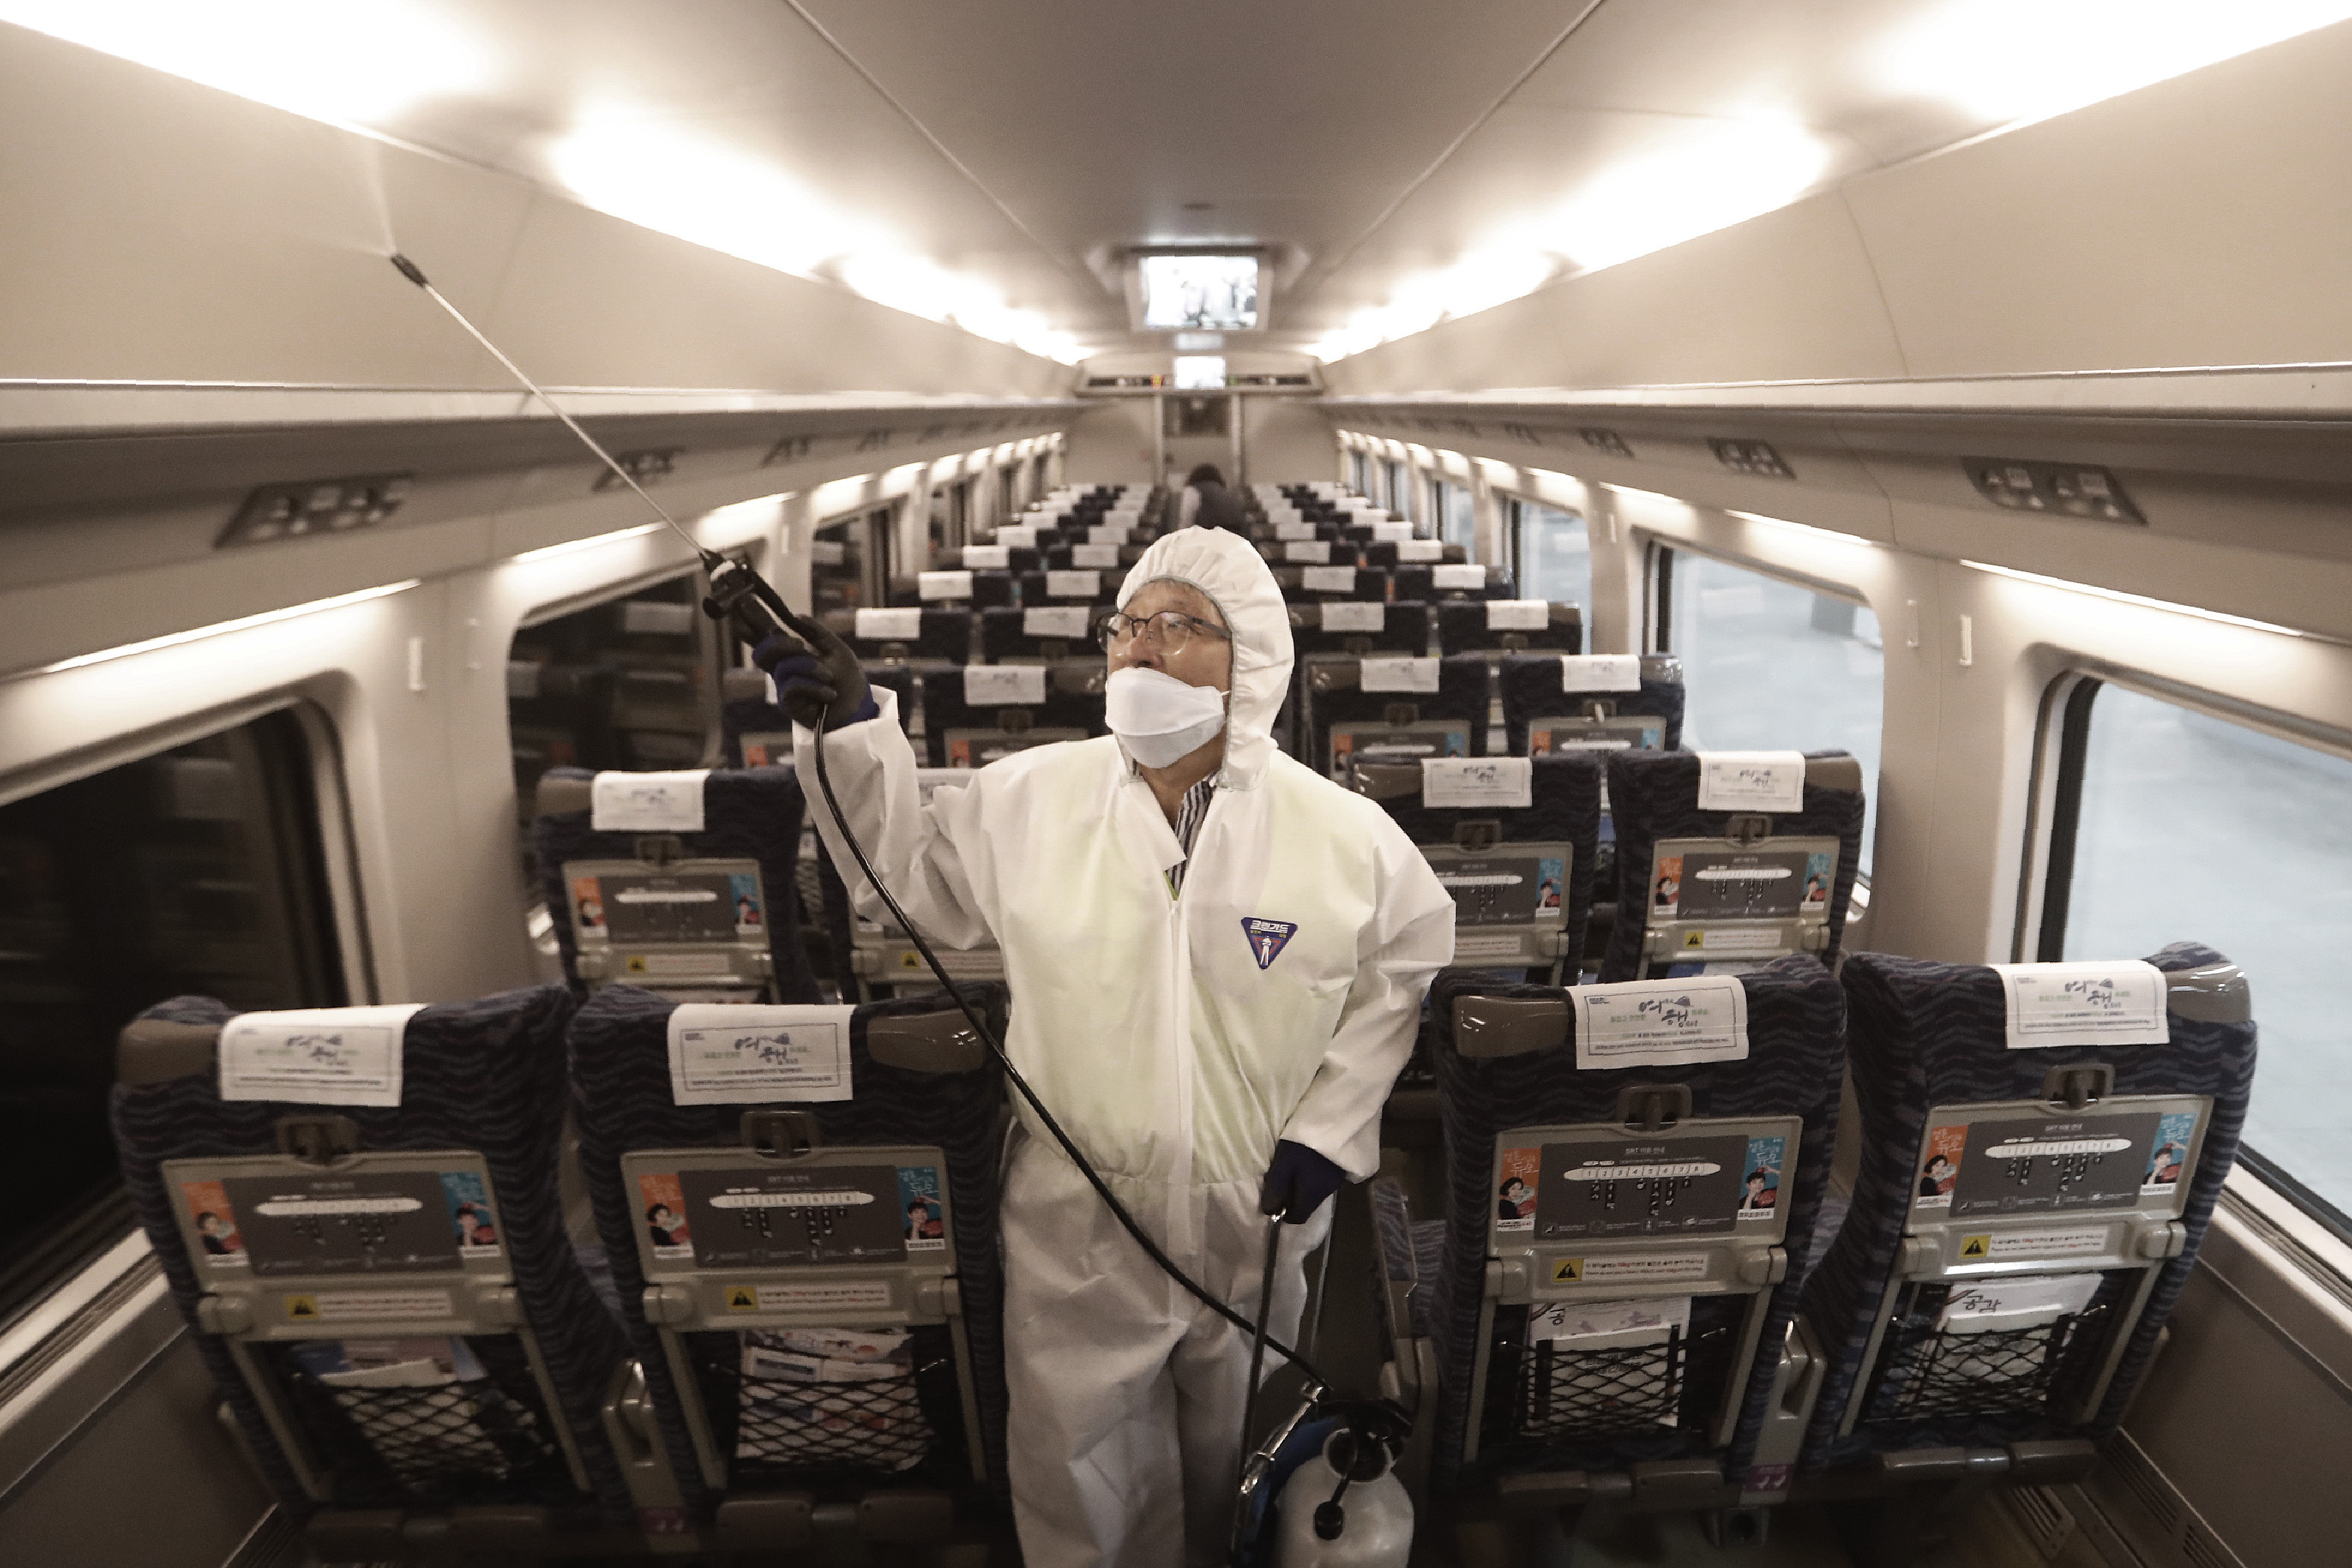 Disinfectant is sprayed on a train as a precaution against the coronavirus in Seoul, South Korea, on January 24.